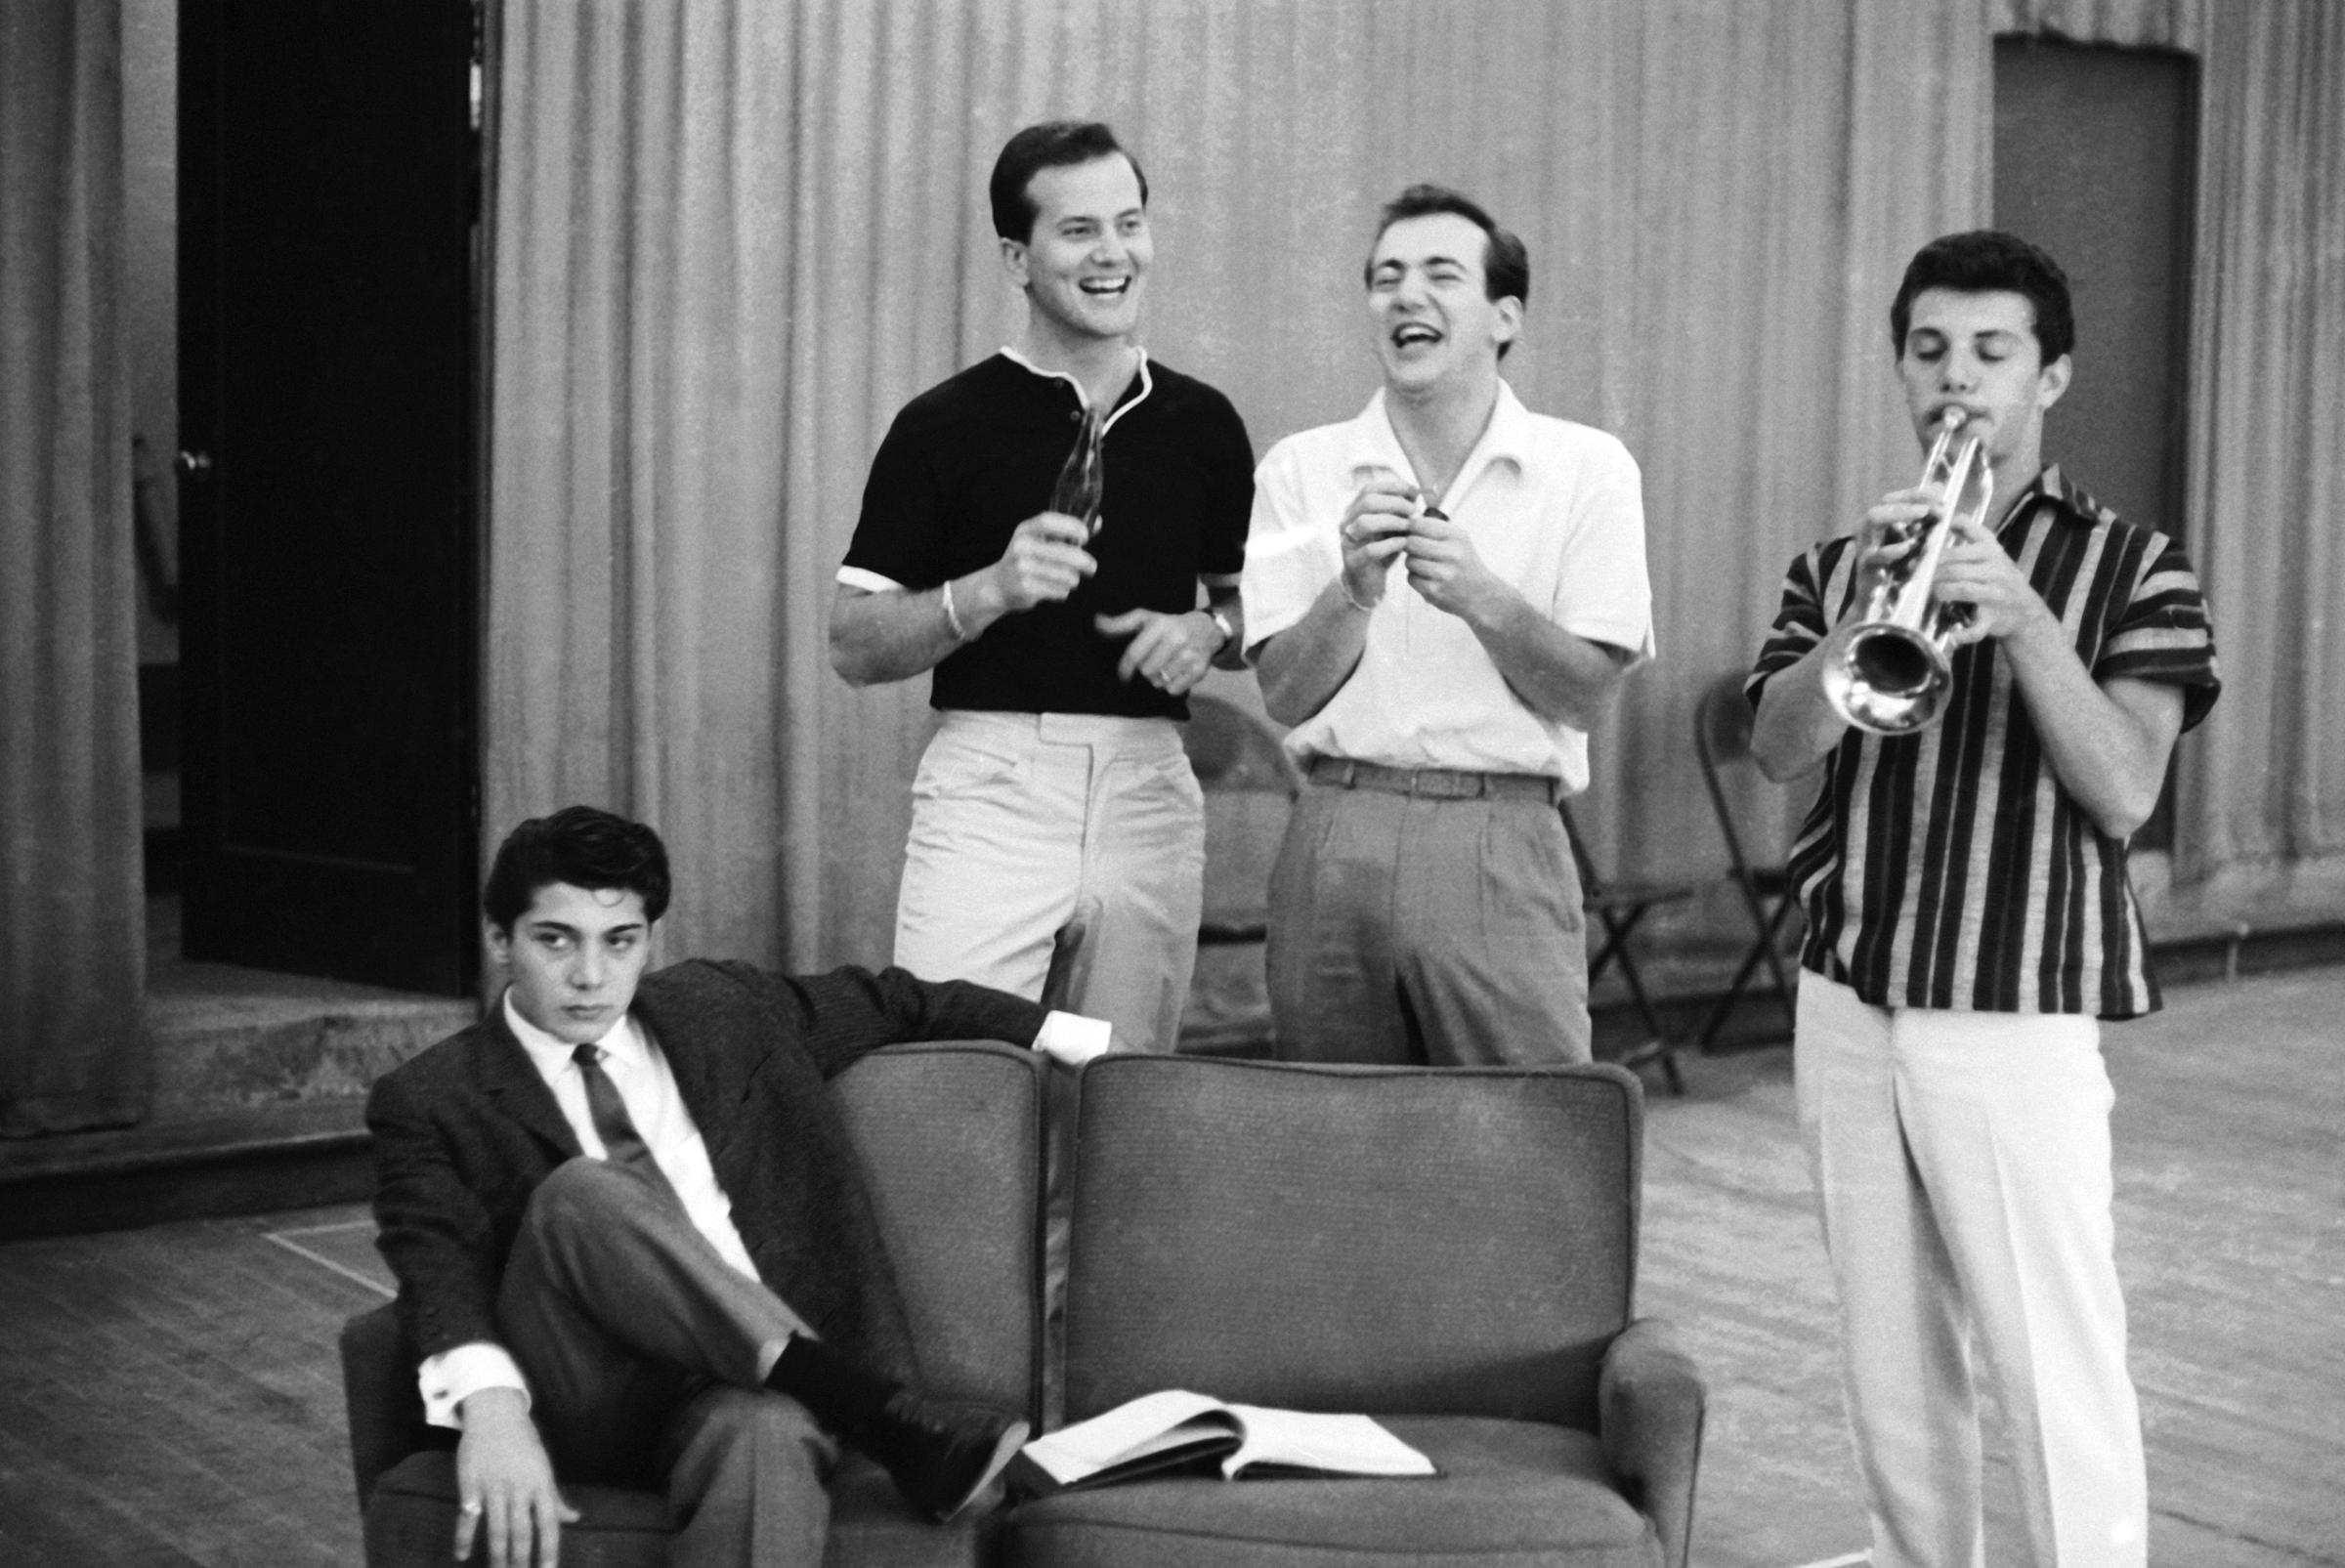 Paul Anka, Pat Boone, Bobby Darin and Frankie Avalon during a rehearsal, 1960.